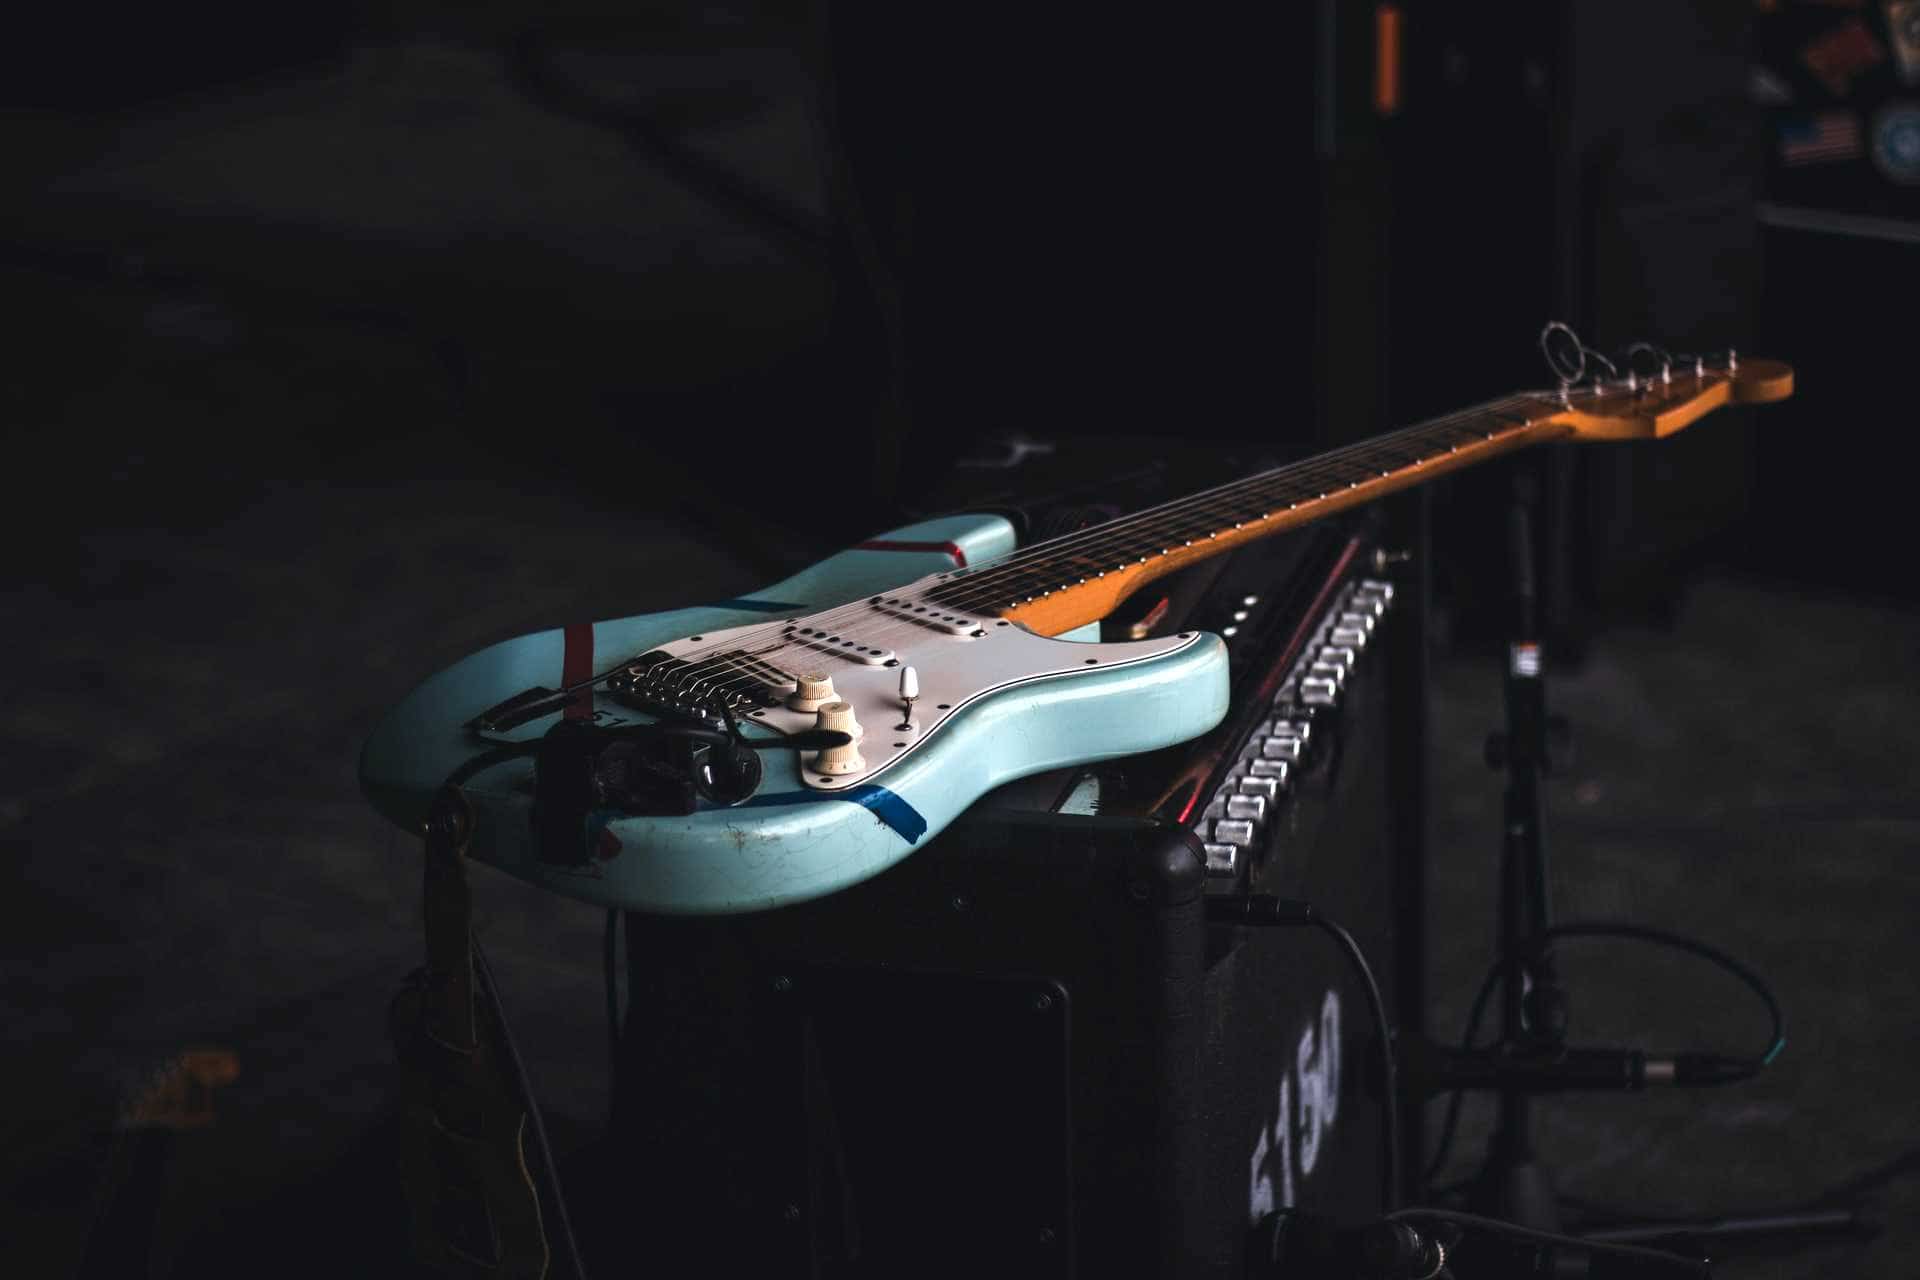 Blue Fender guitar on amp